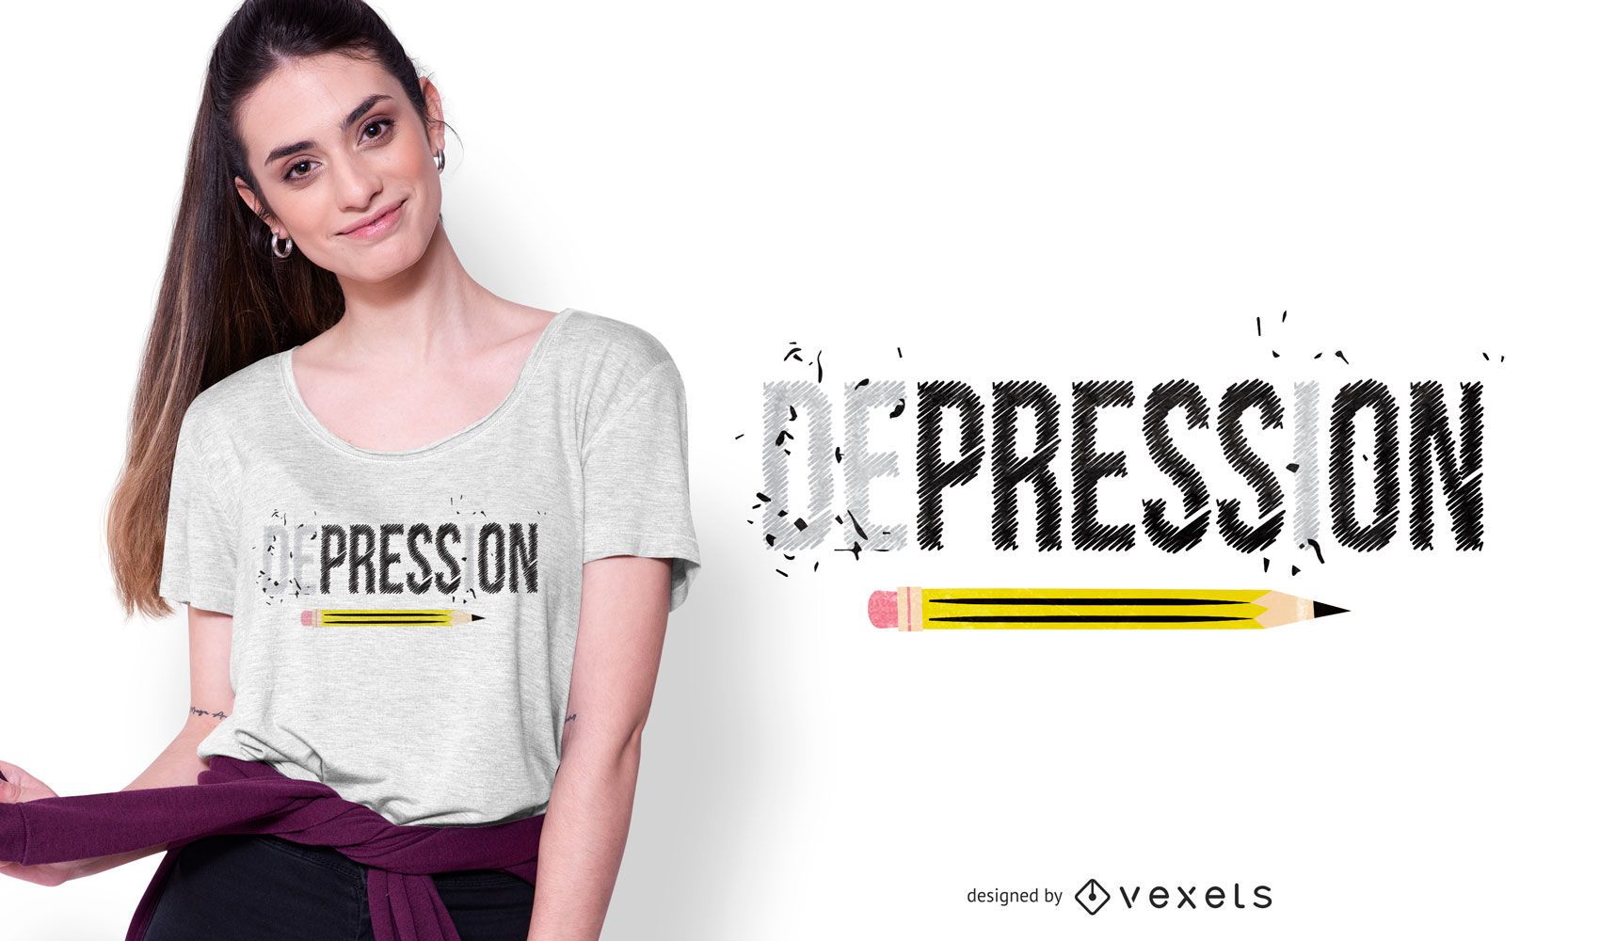 Press on t-shirt design